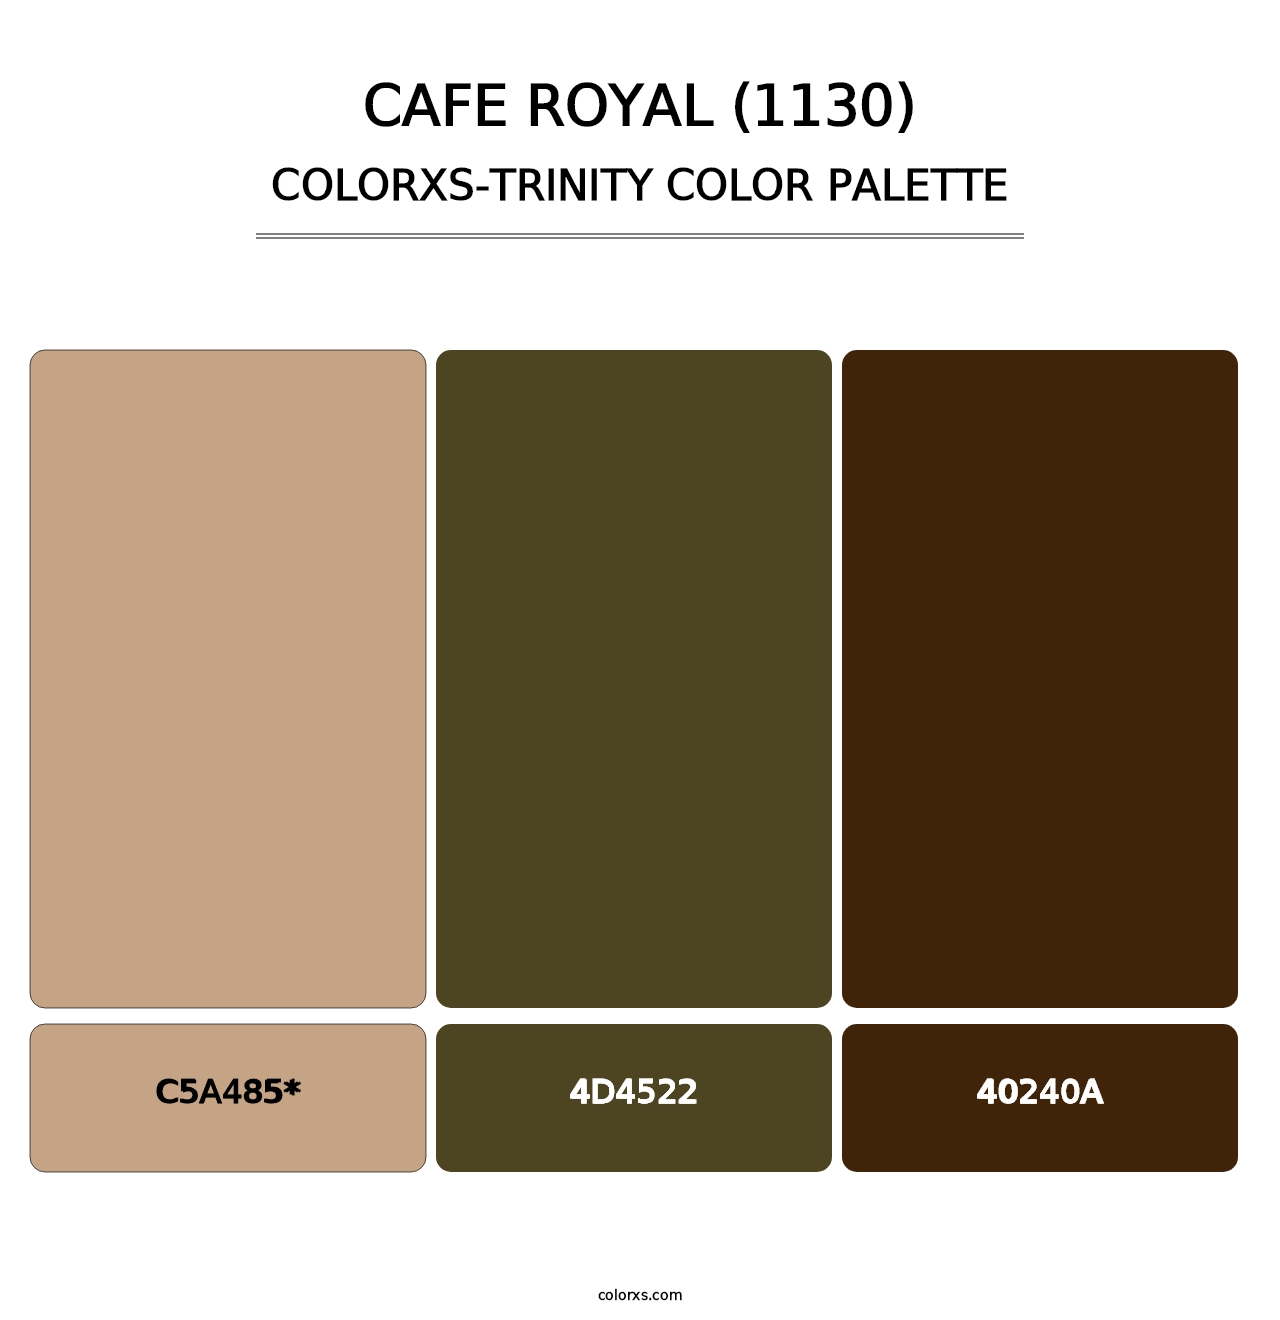 Cafe Royal (1130) - Colorxs Trinity Palette